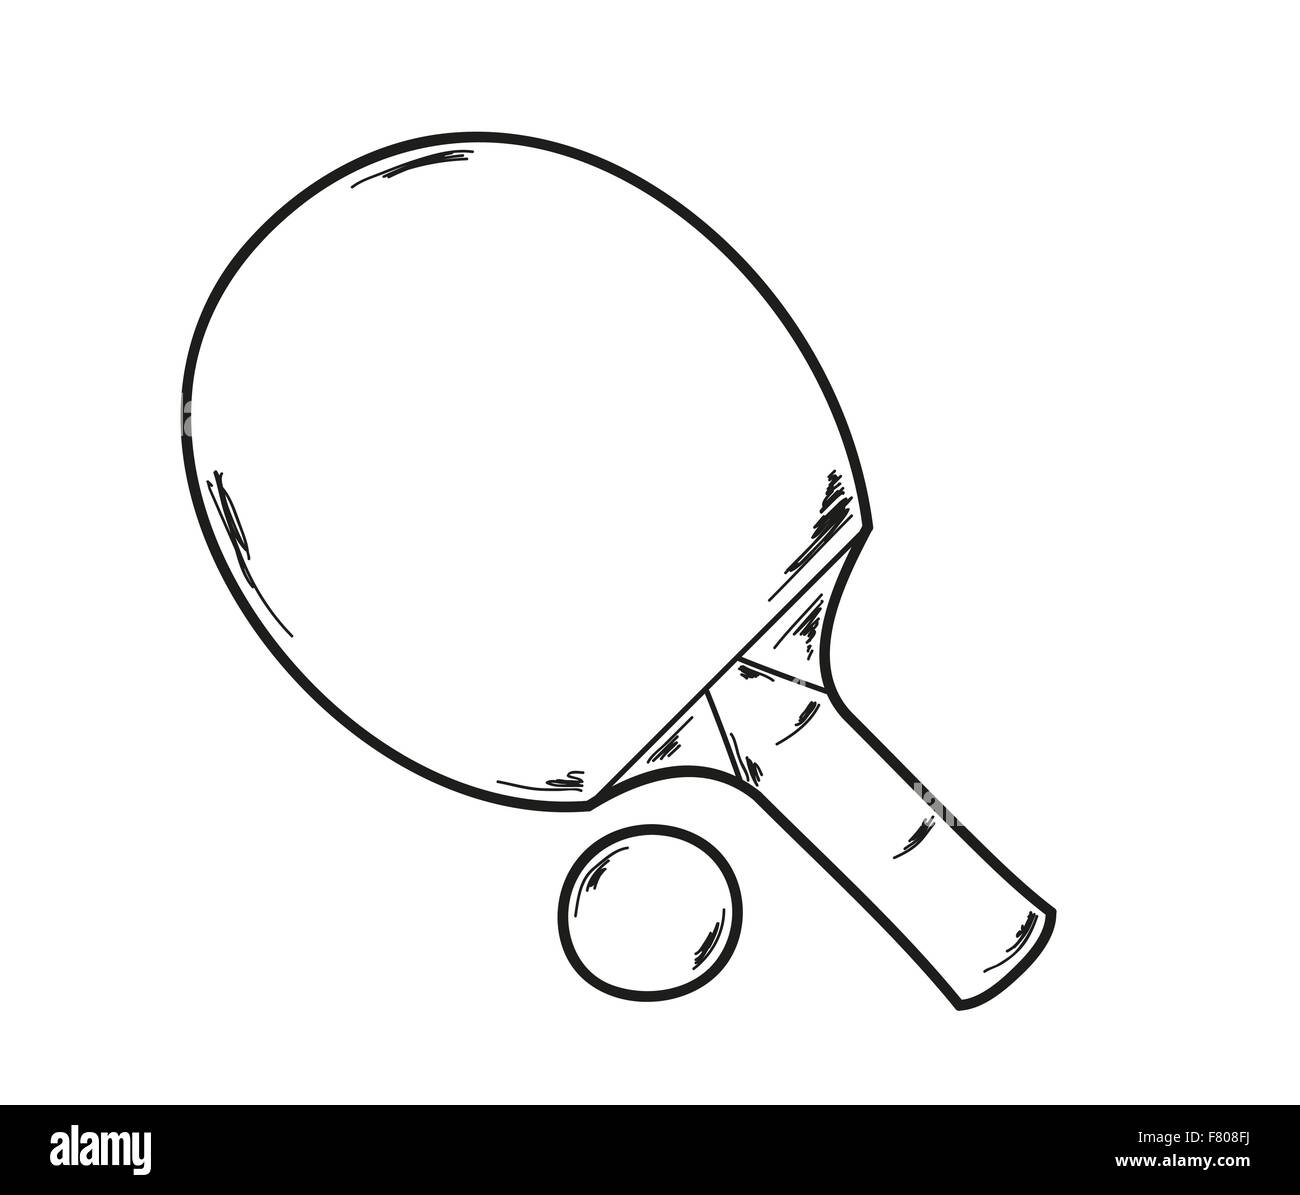 Table tennis racket drawing free image download